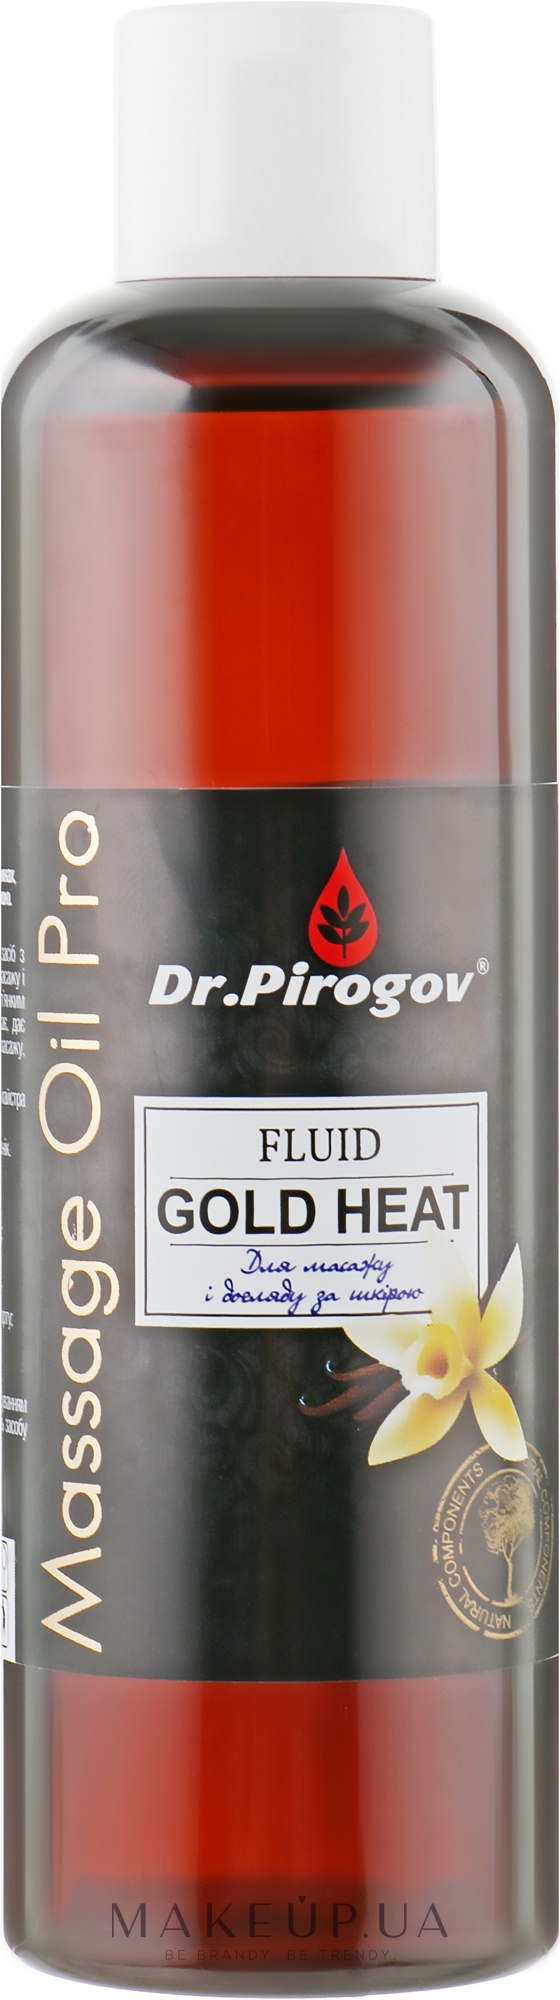 Масло для массажа и ухода за кожей с ароматом ванили - Dr.Pirogov Fluid Gold Heat Massage Oil — фото 200ml